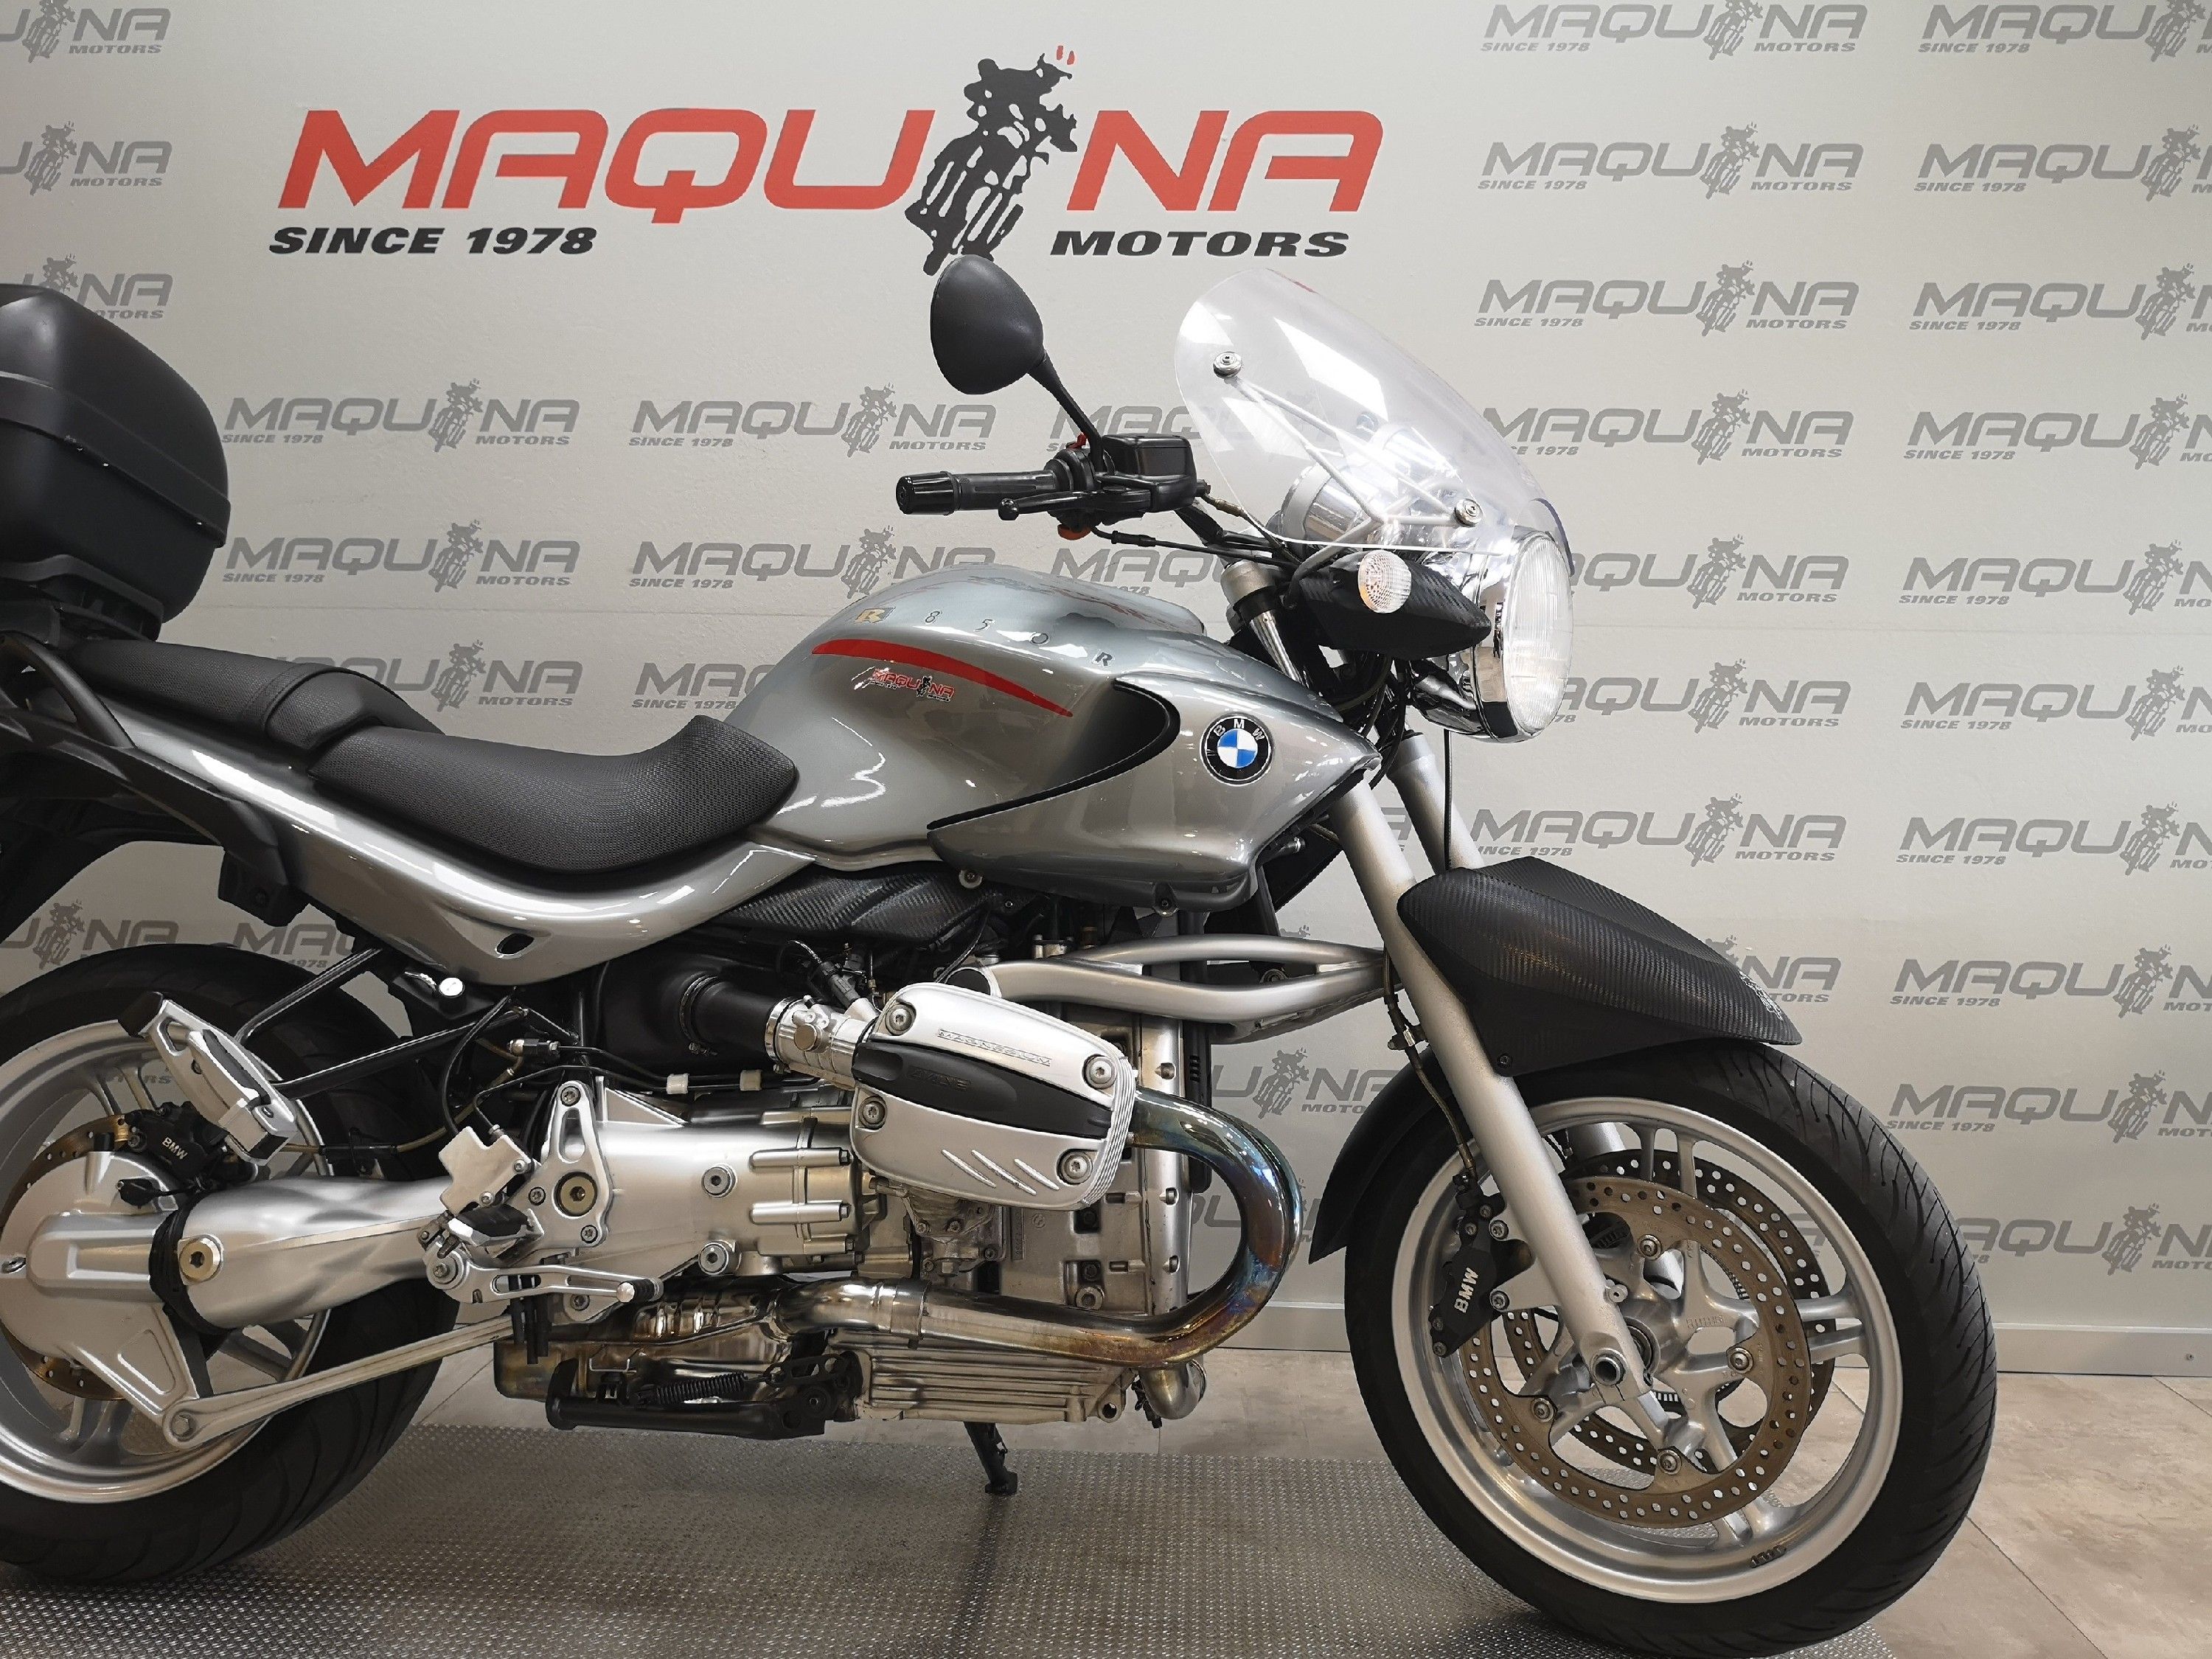 BMW 850 – Maquina Motors motos ocasión